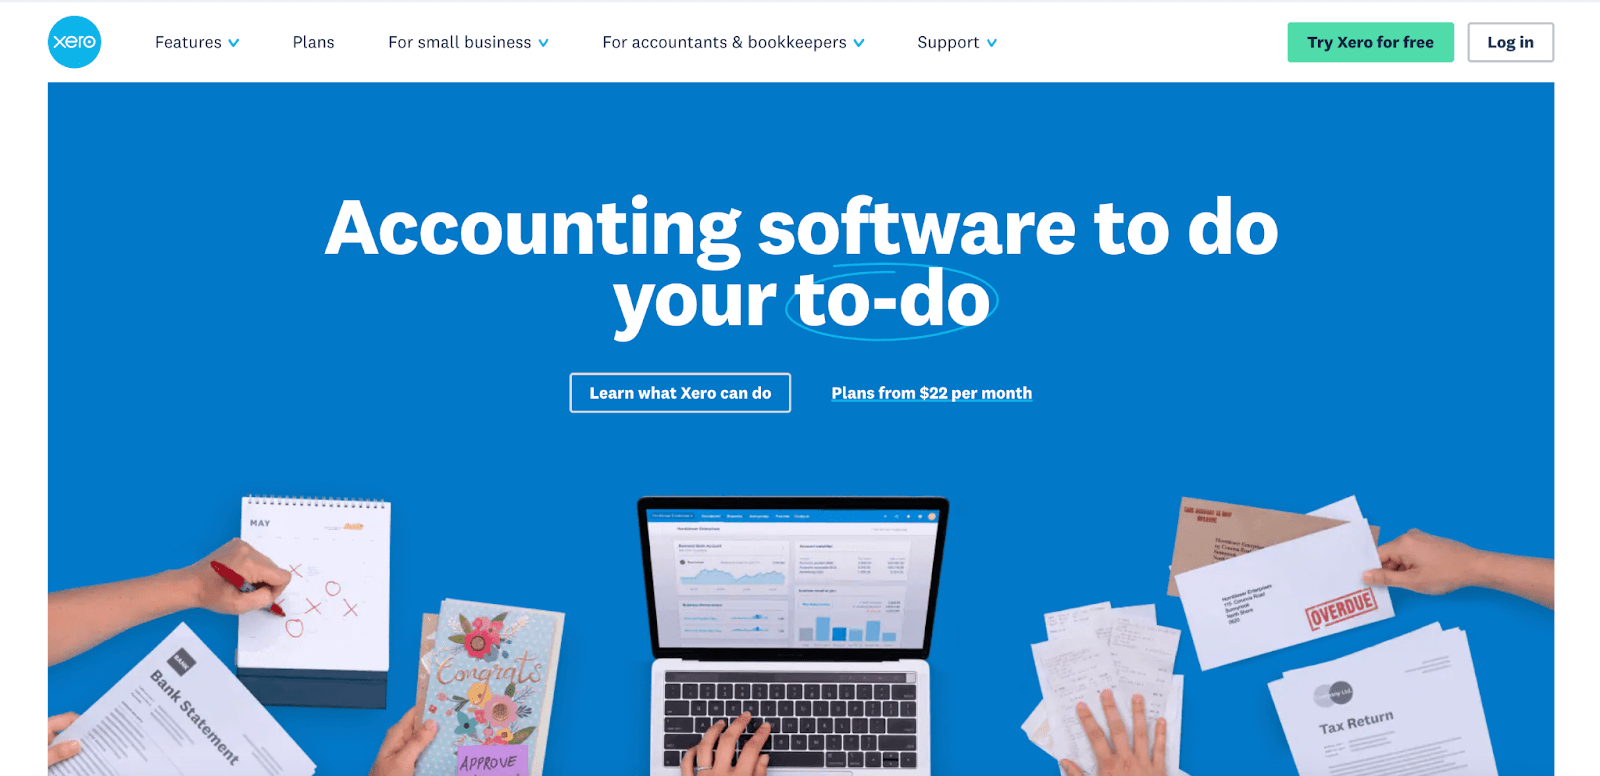 Xero to automate accounting